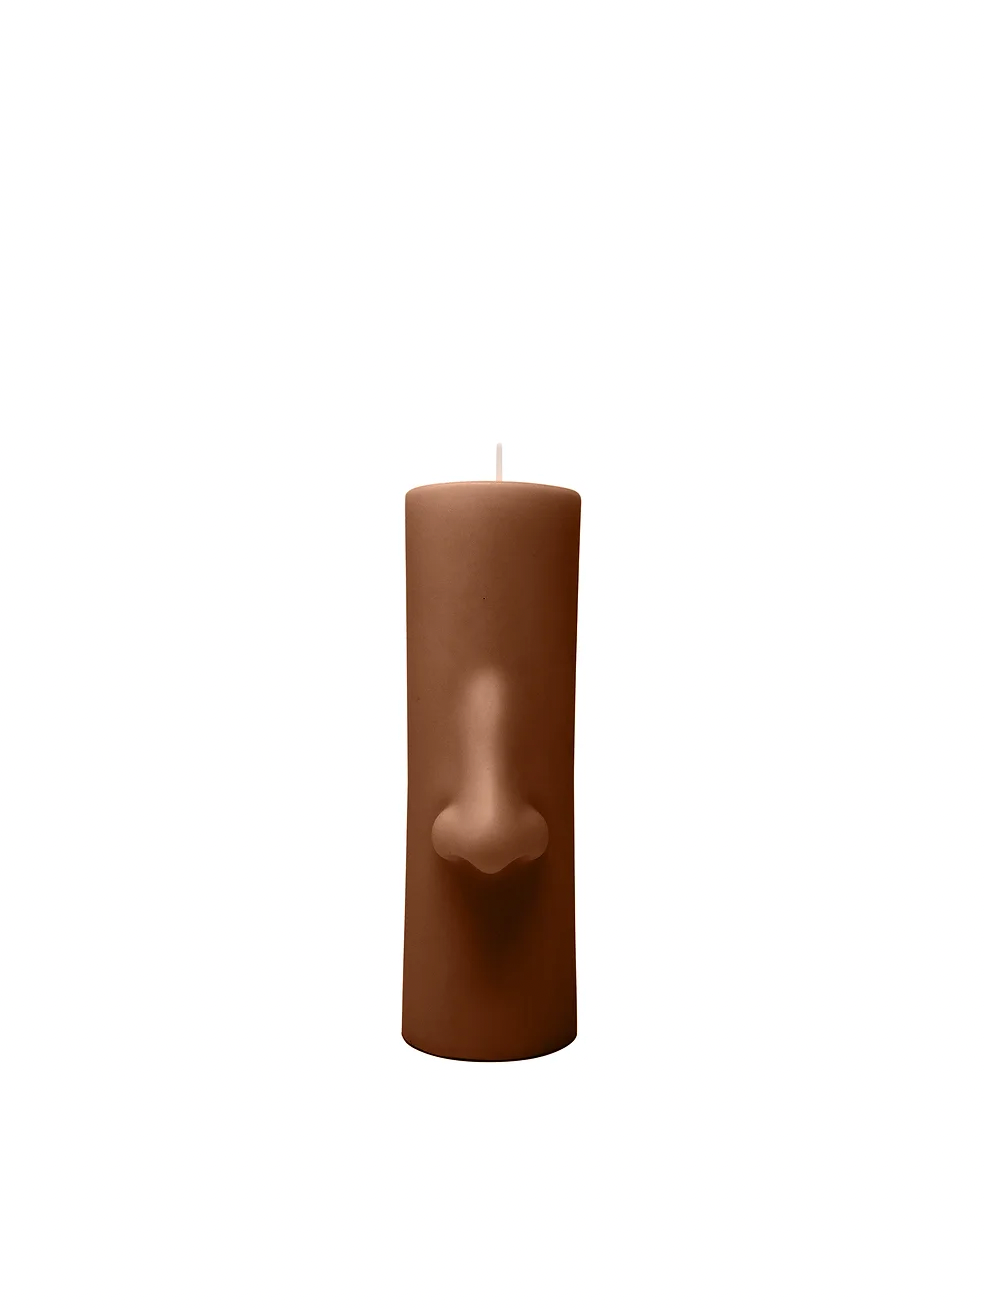 Nose Pillar Candle in Terra Cotta